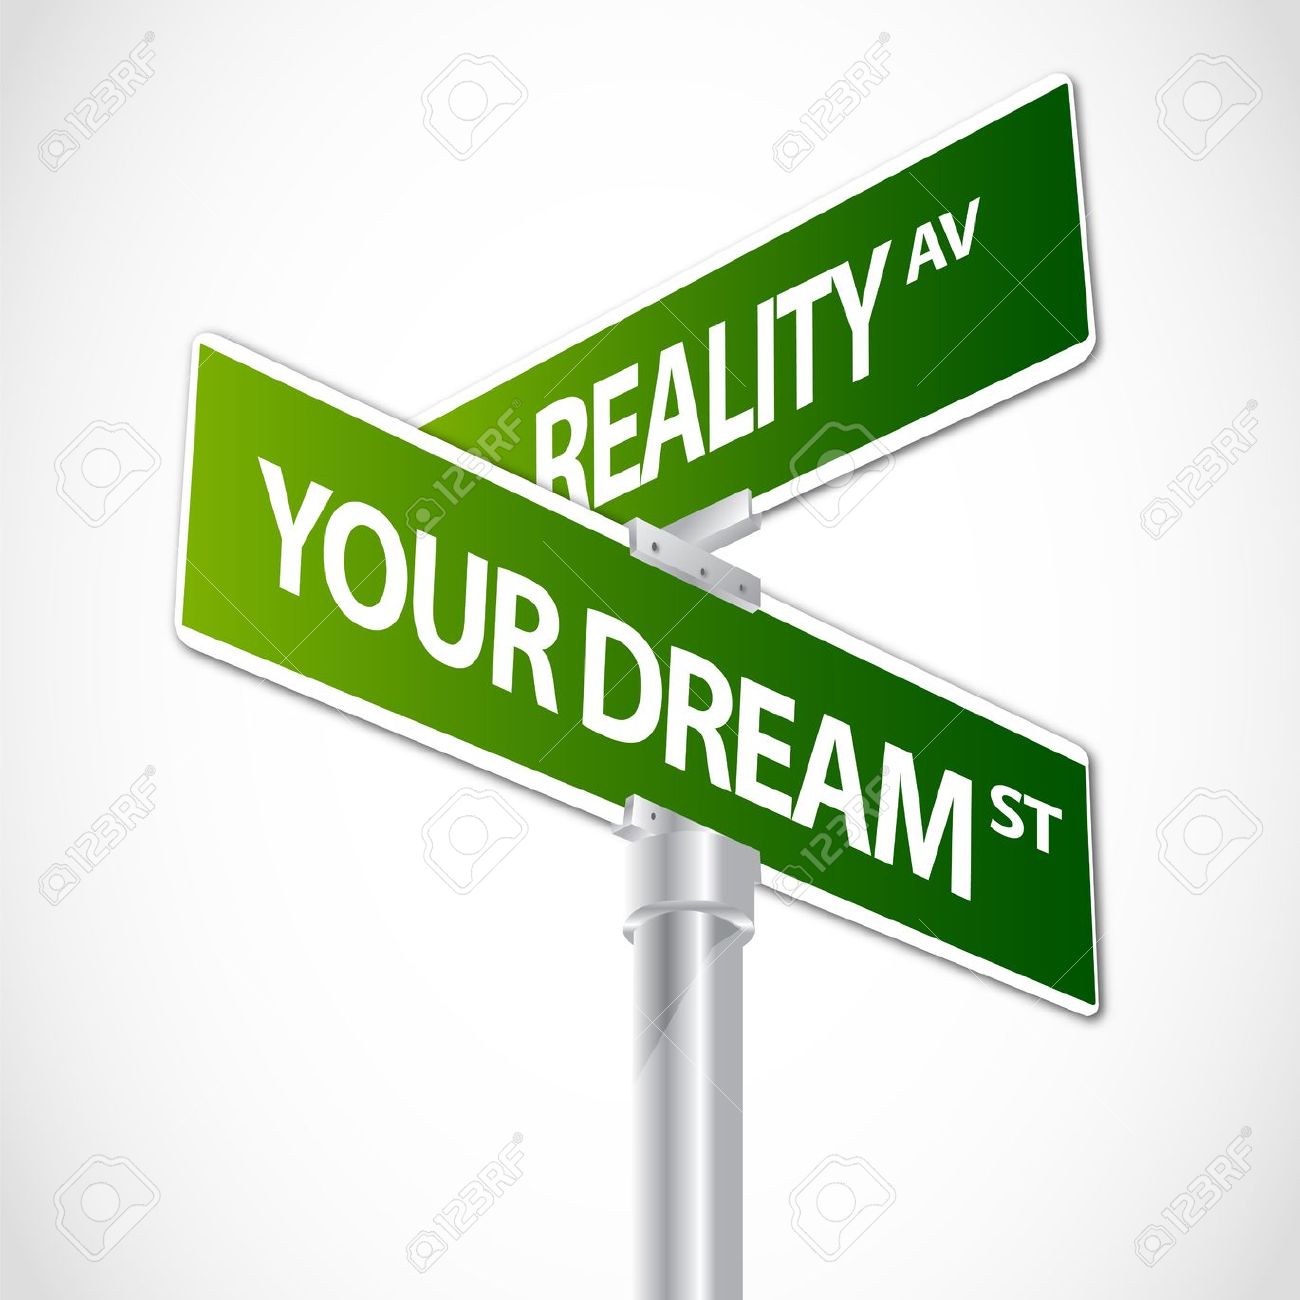 dream vs reality